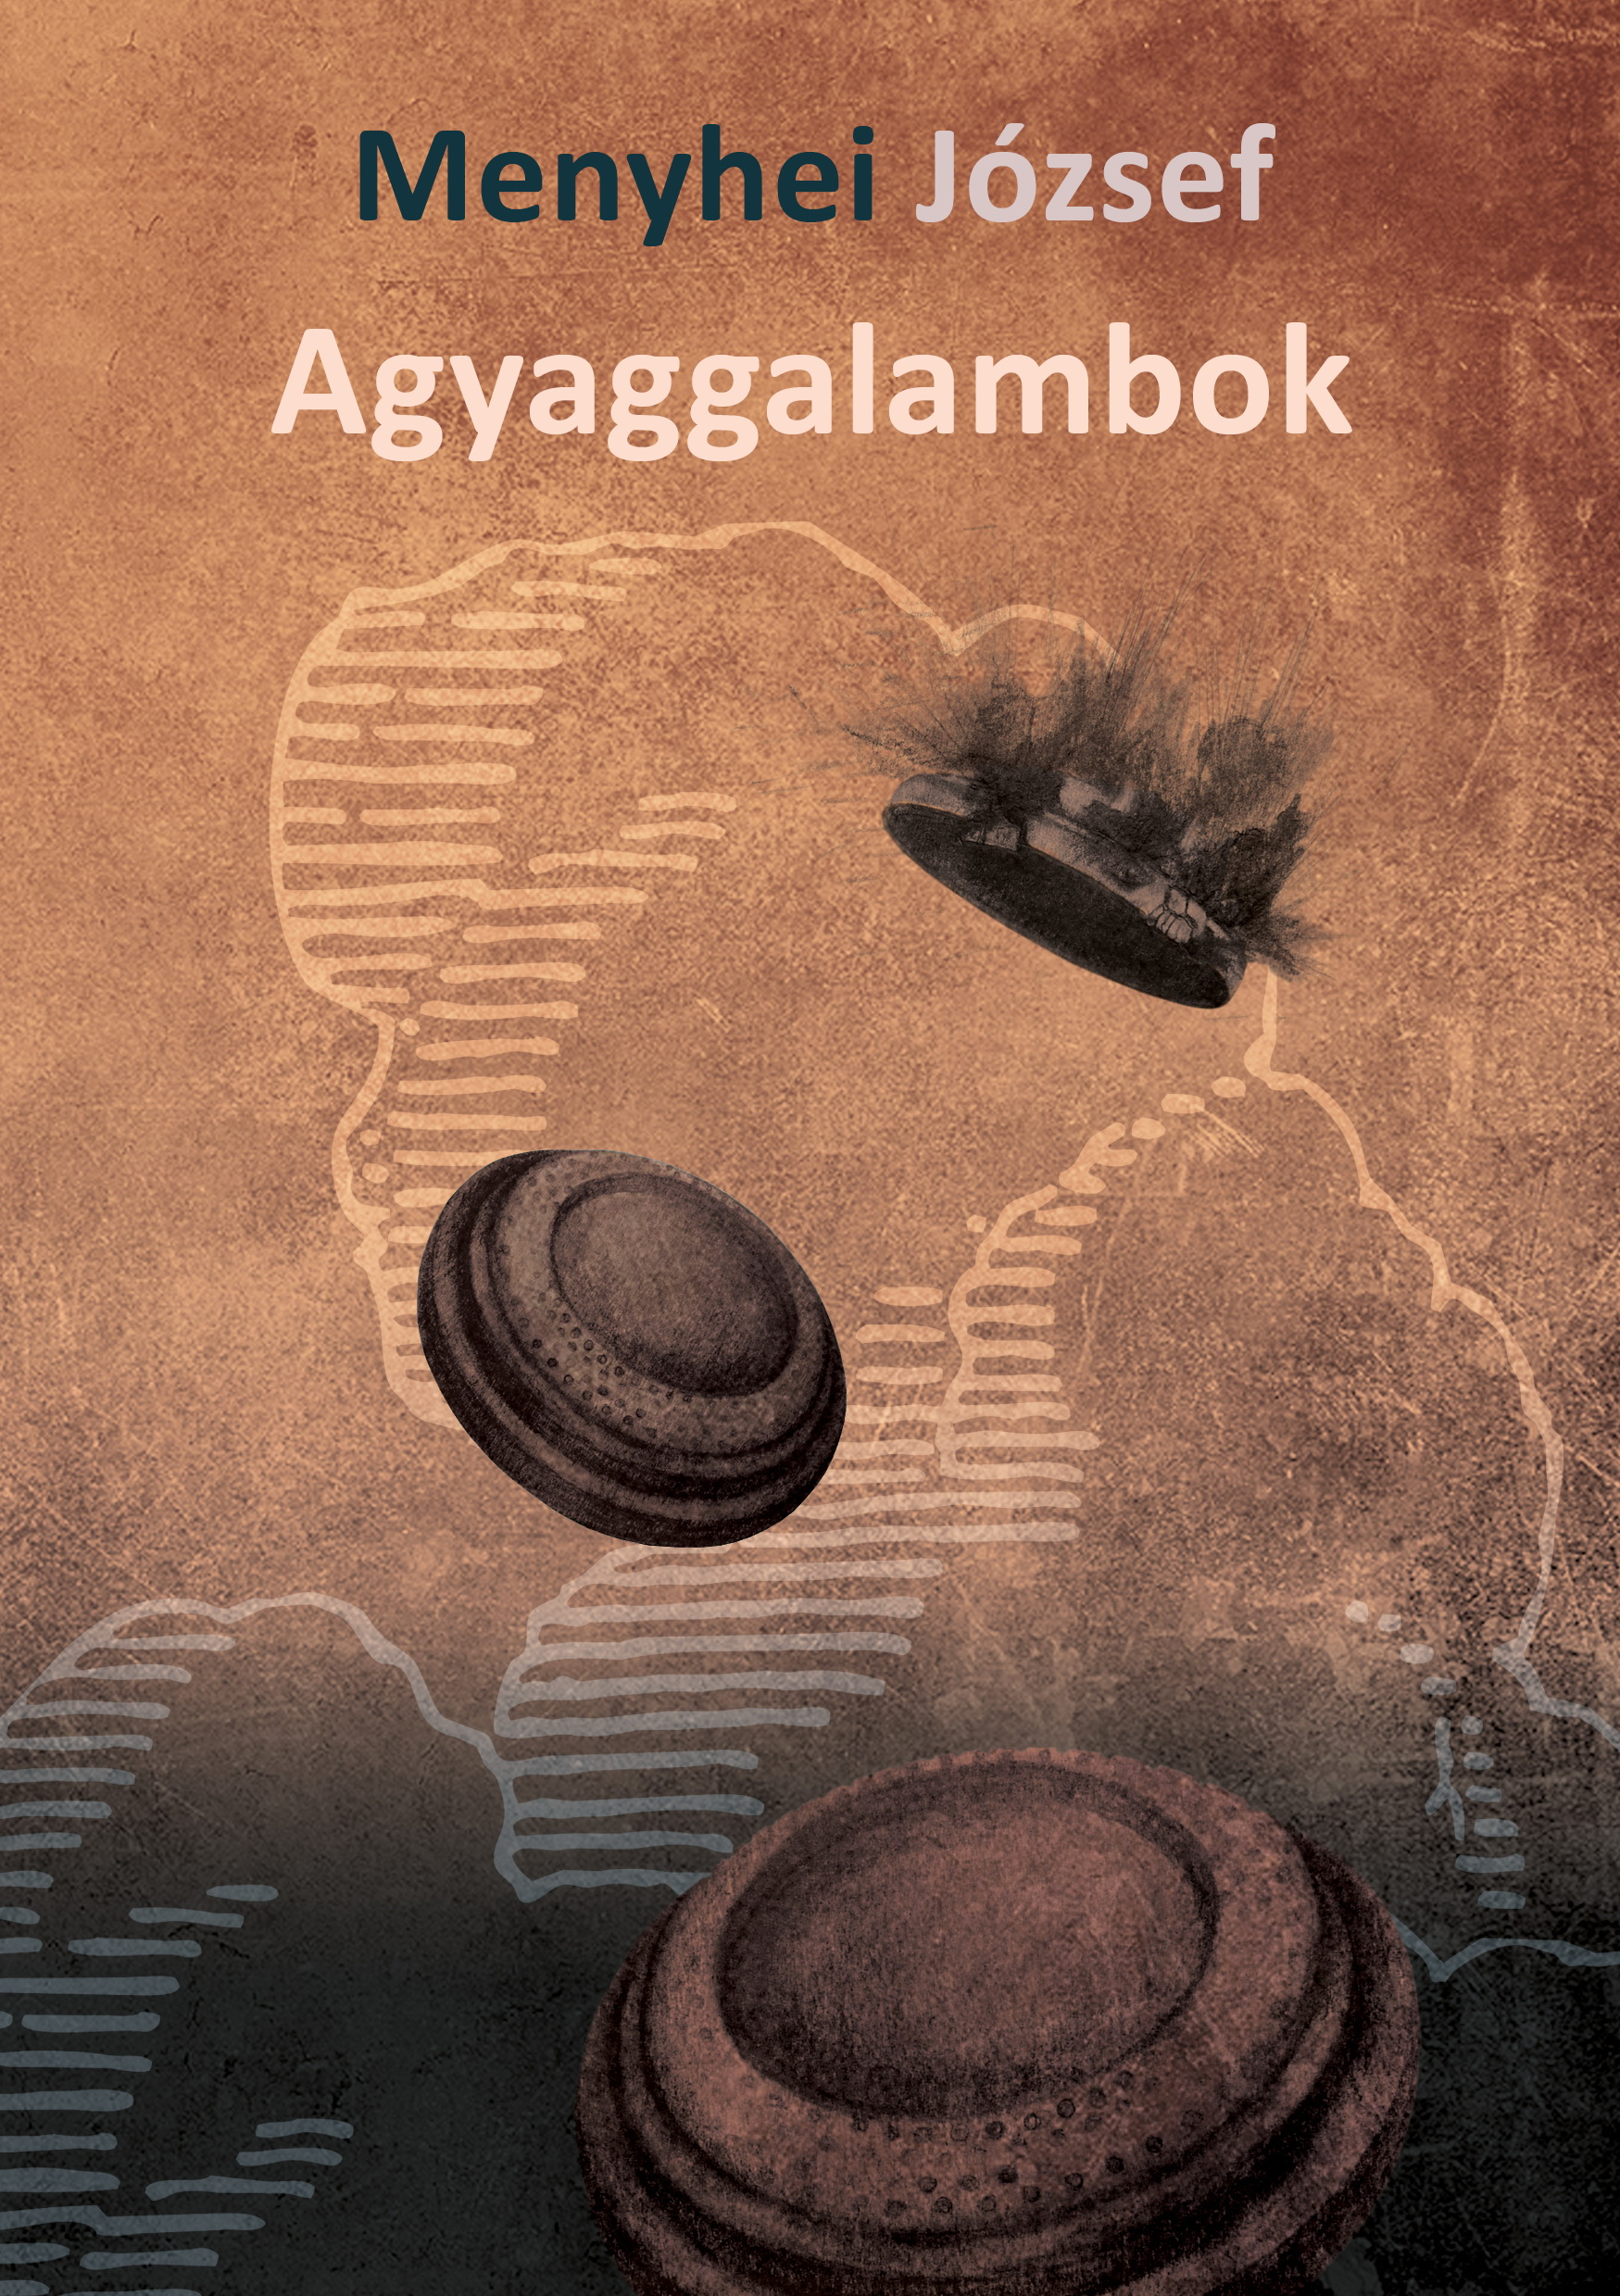 Menyhei József AGYAGGALAMBOK - PDF Free Download